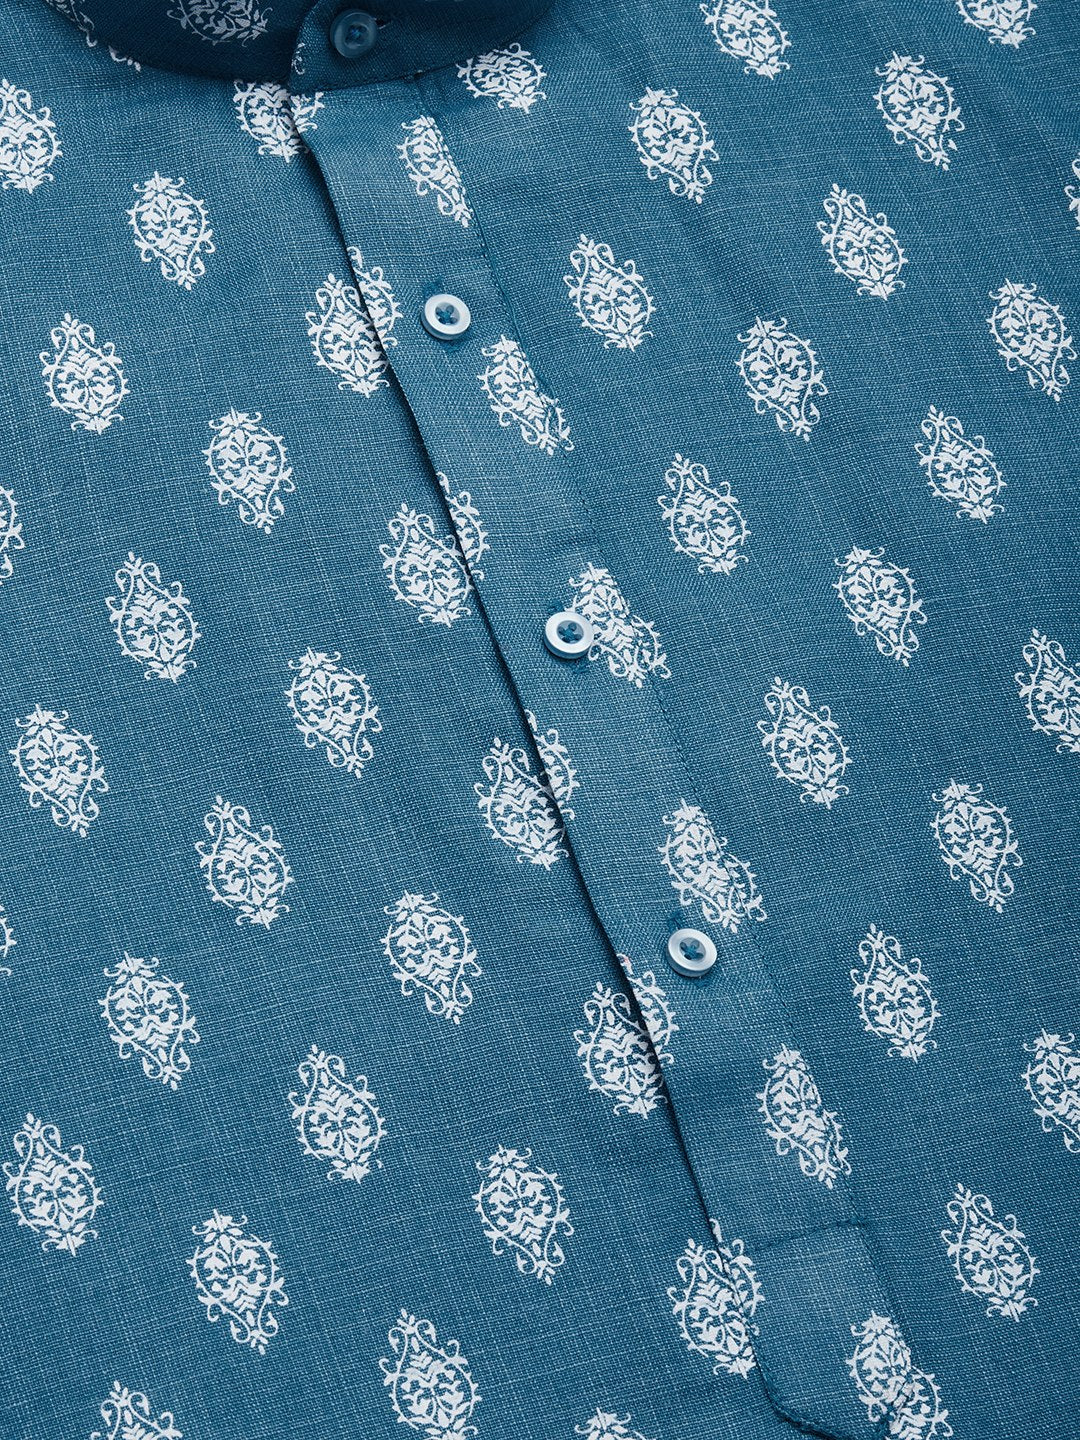 Jompers Men's Teal Cotton Floral printed kurta Pyjama Set ( JOKP 650 Teal )